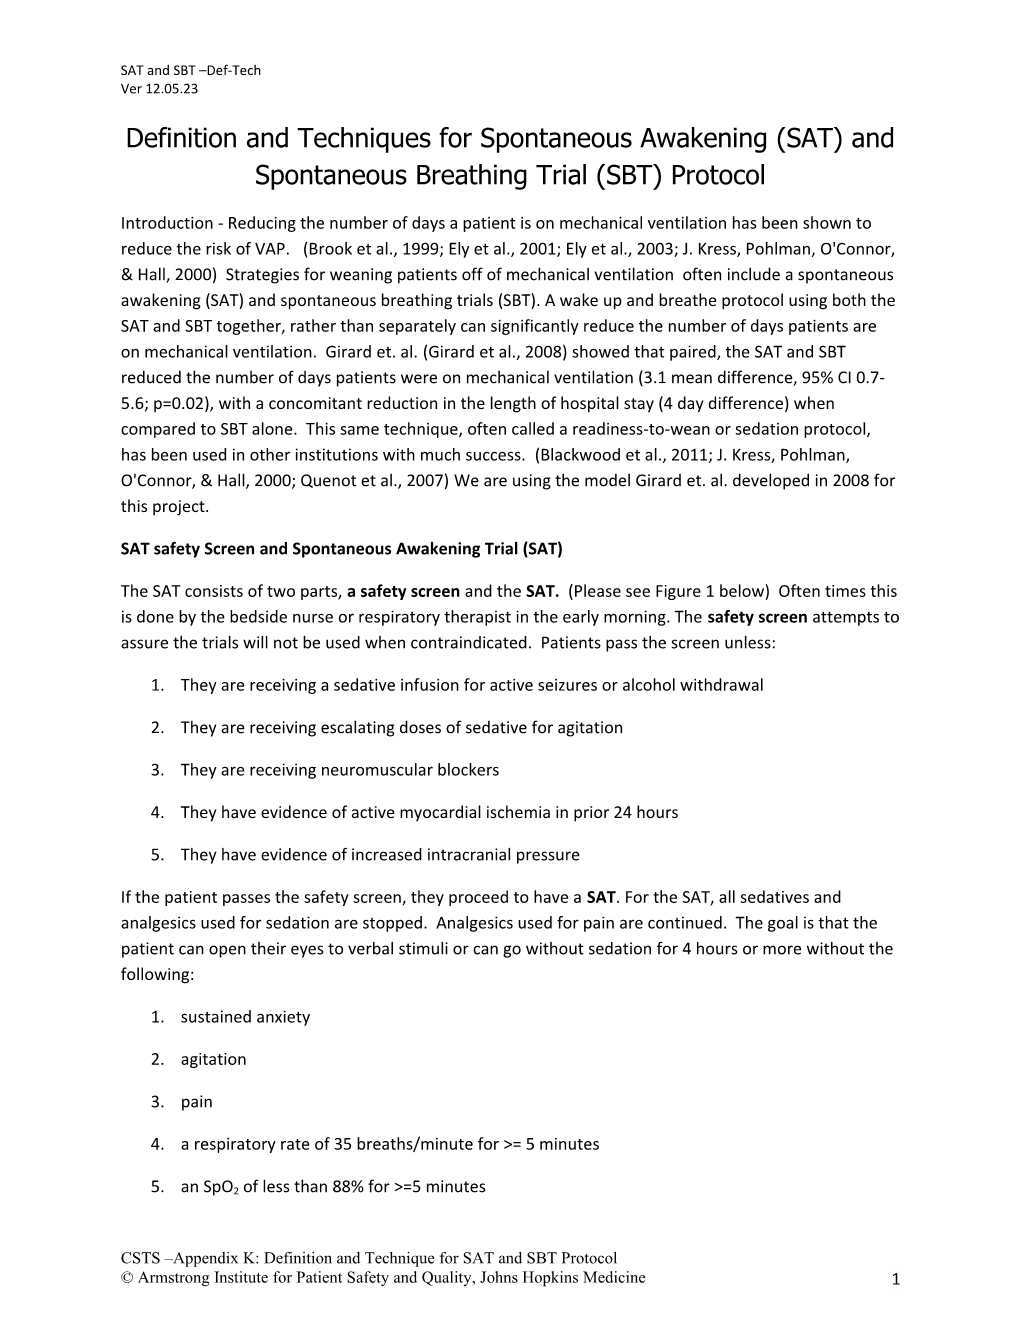 SAT Safety Screen and Spontaneous Awakening Trial (SAT)